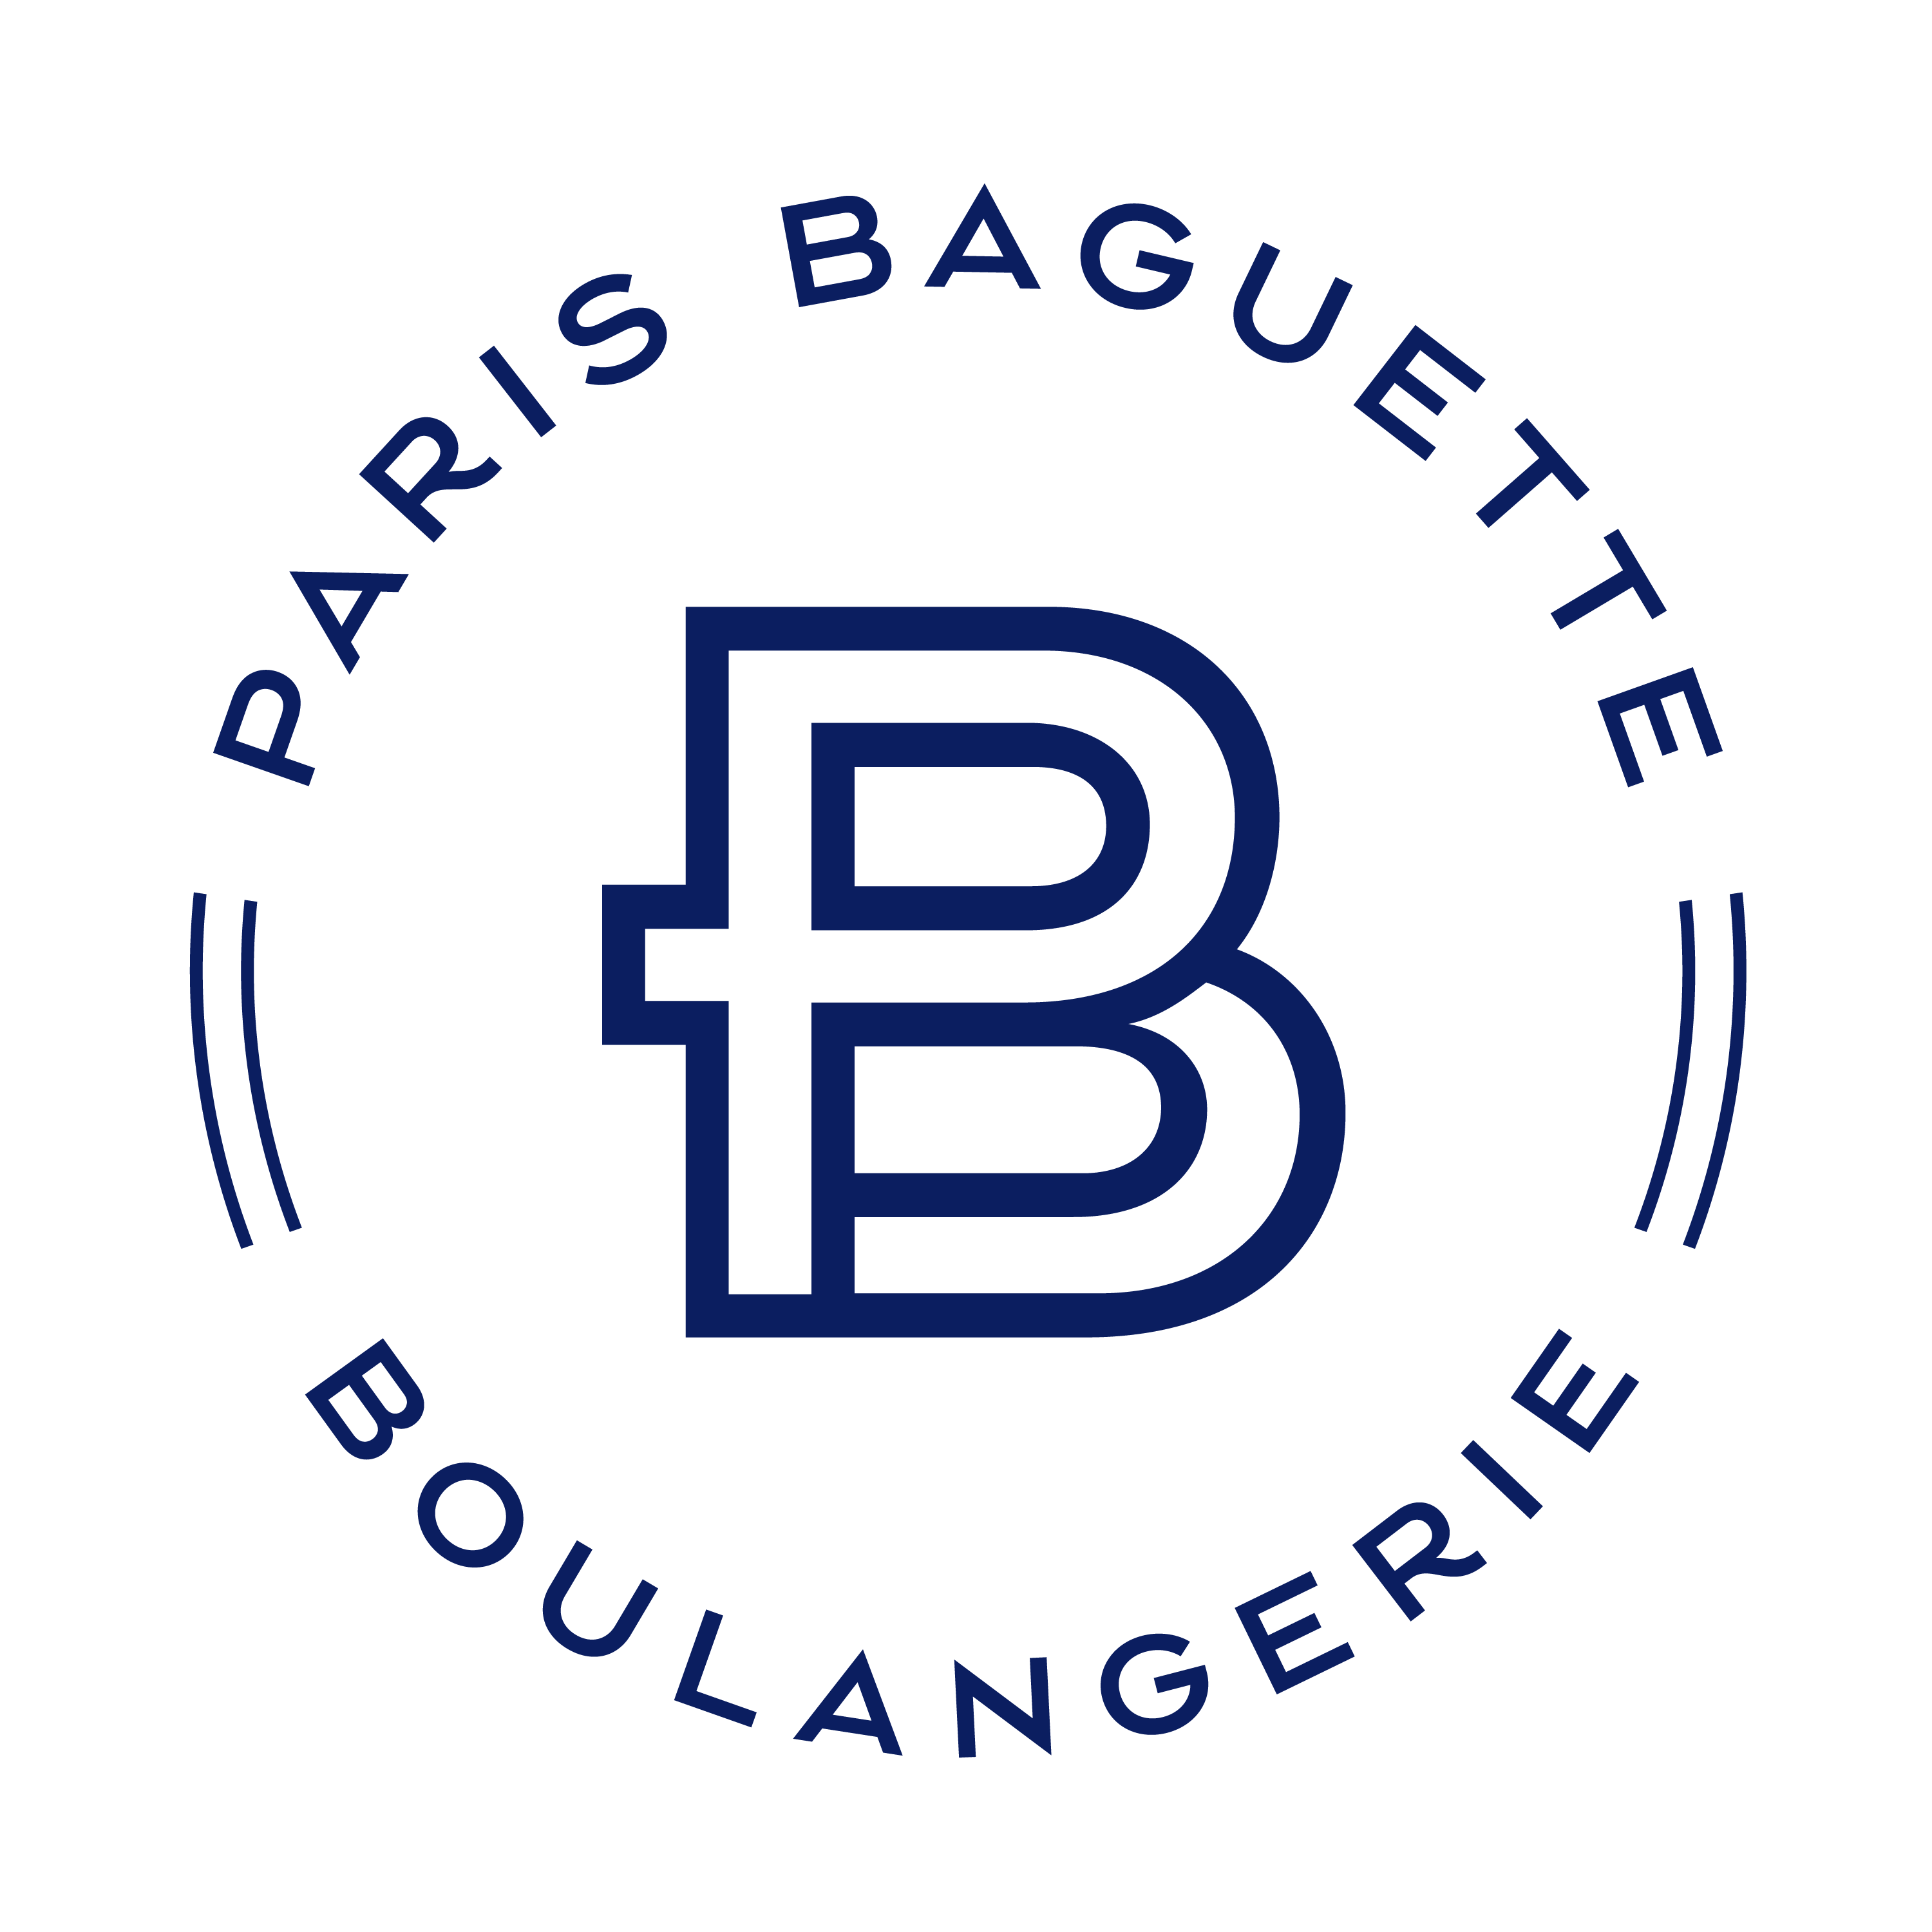 paris baguette logo 10 free Cliparts | Download images on Clipground 2023